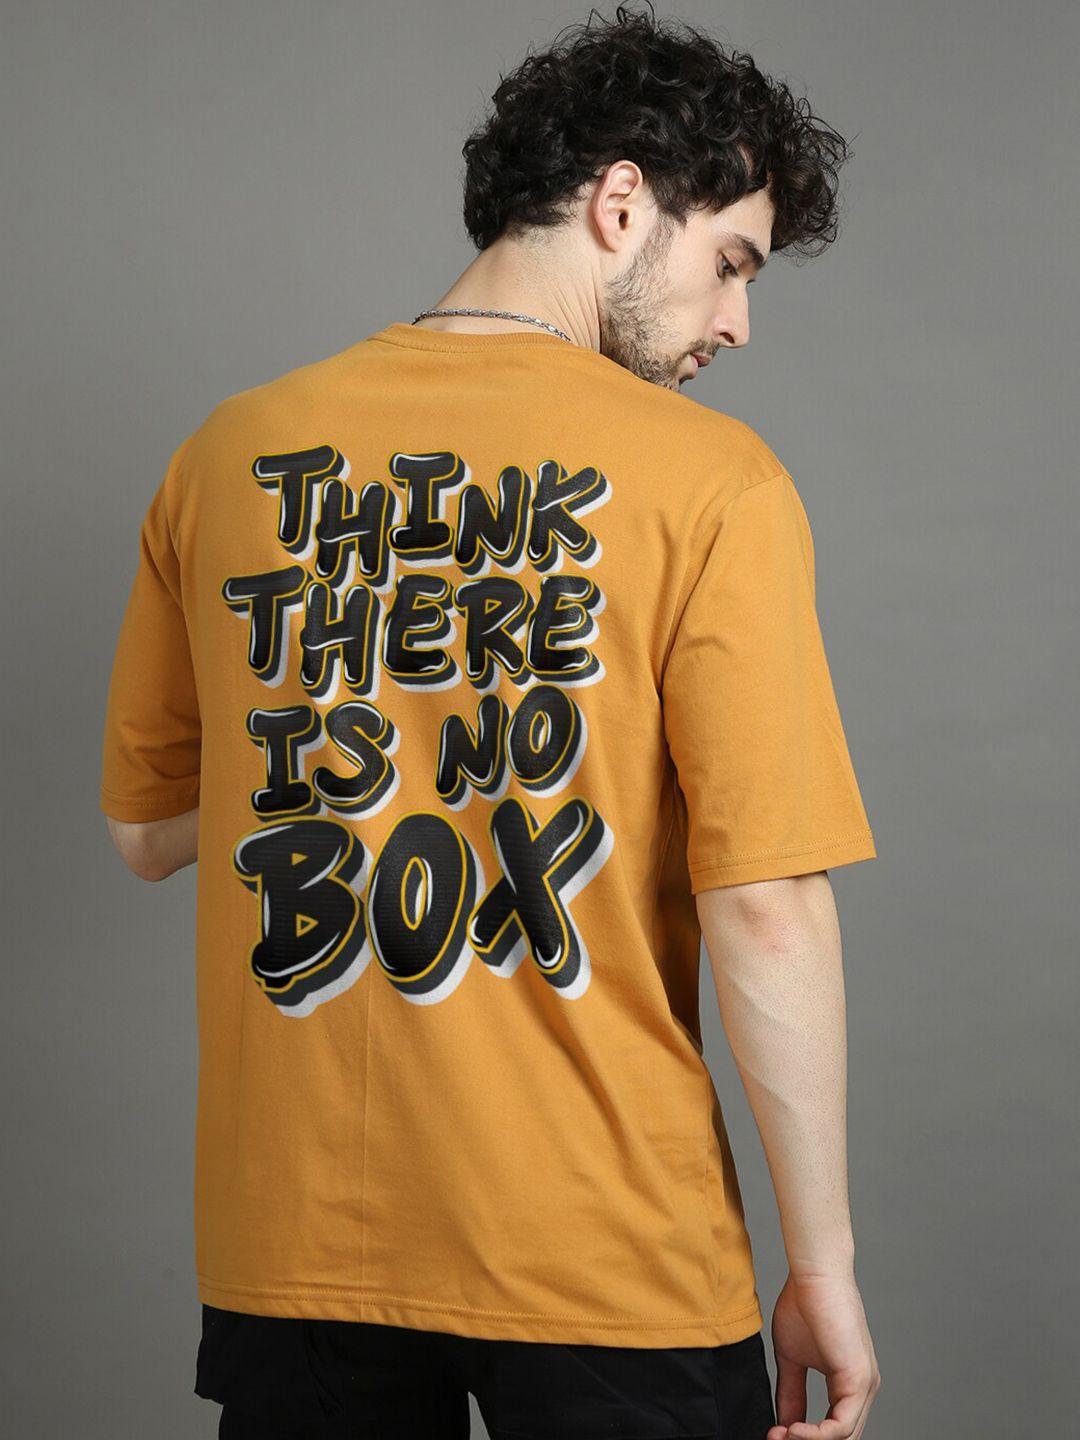 bushirt typography printed round neck pure cotton oversized t-shirt